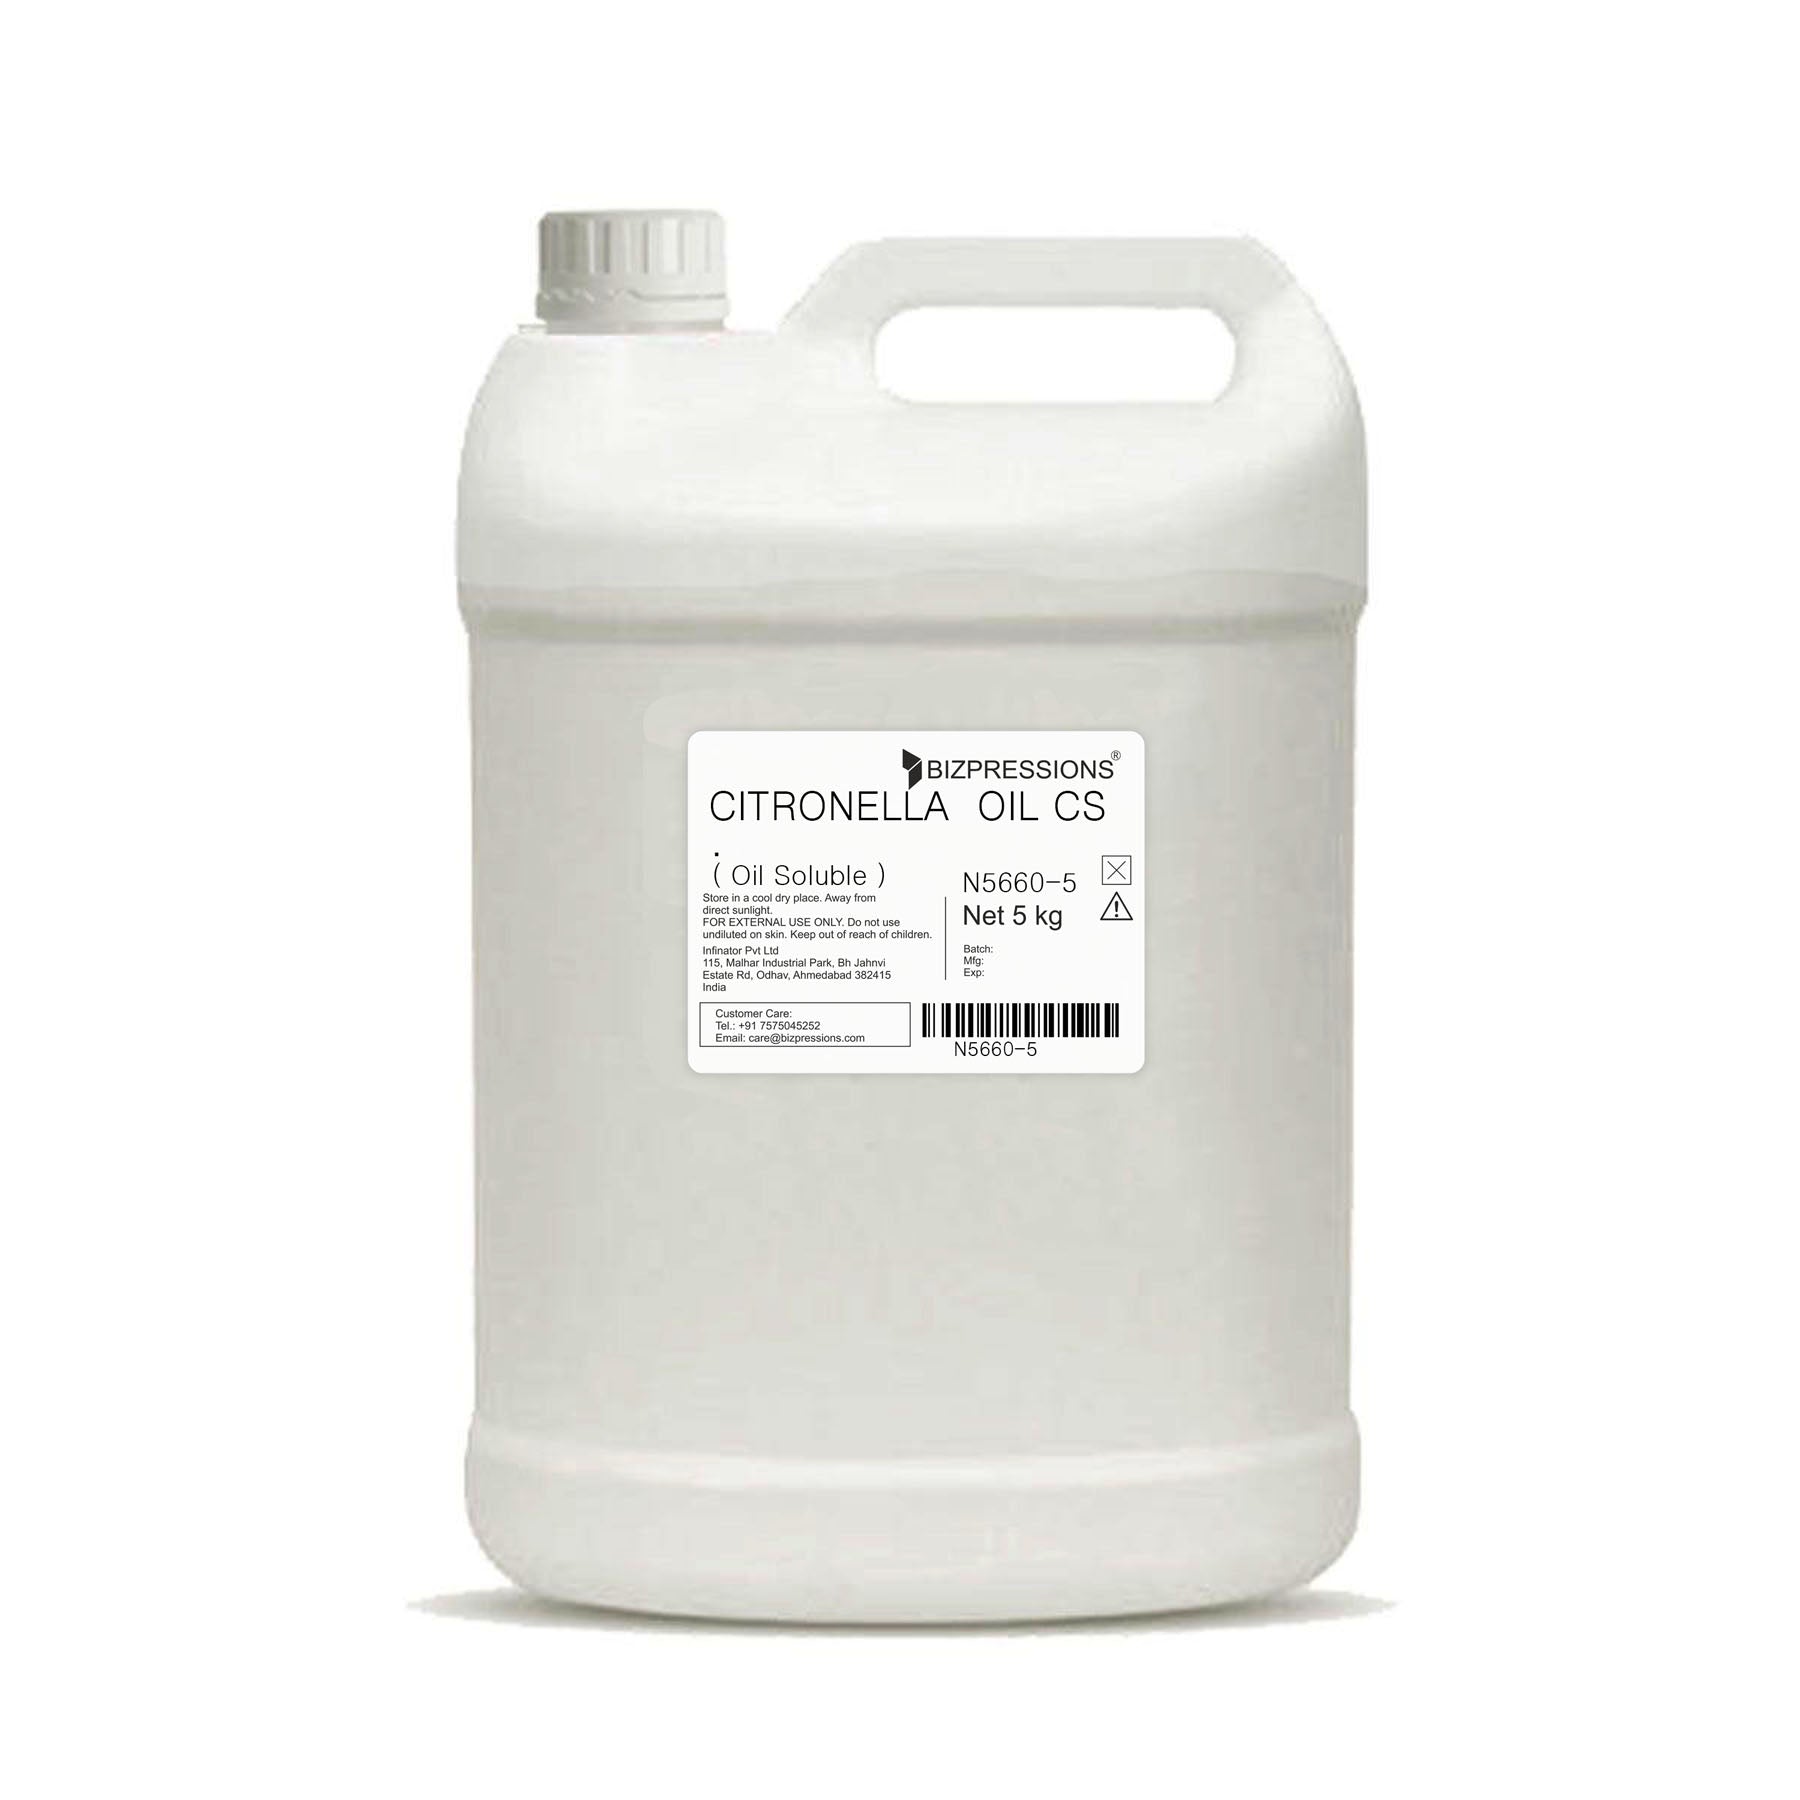 CITRONELLA OIL CS - Fragrance ( Oil Soluble ) - 5 kg